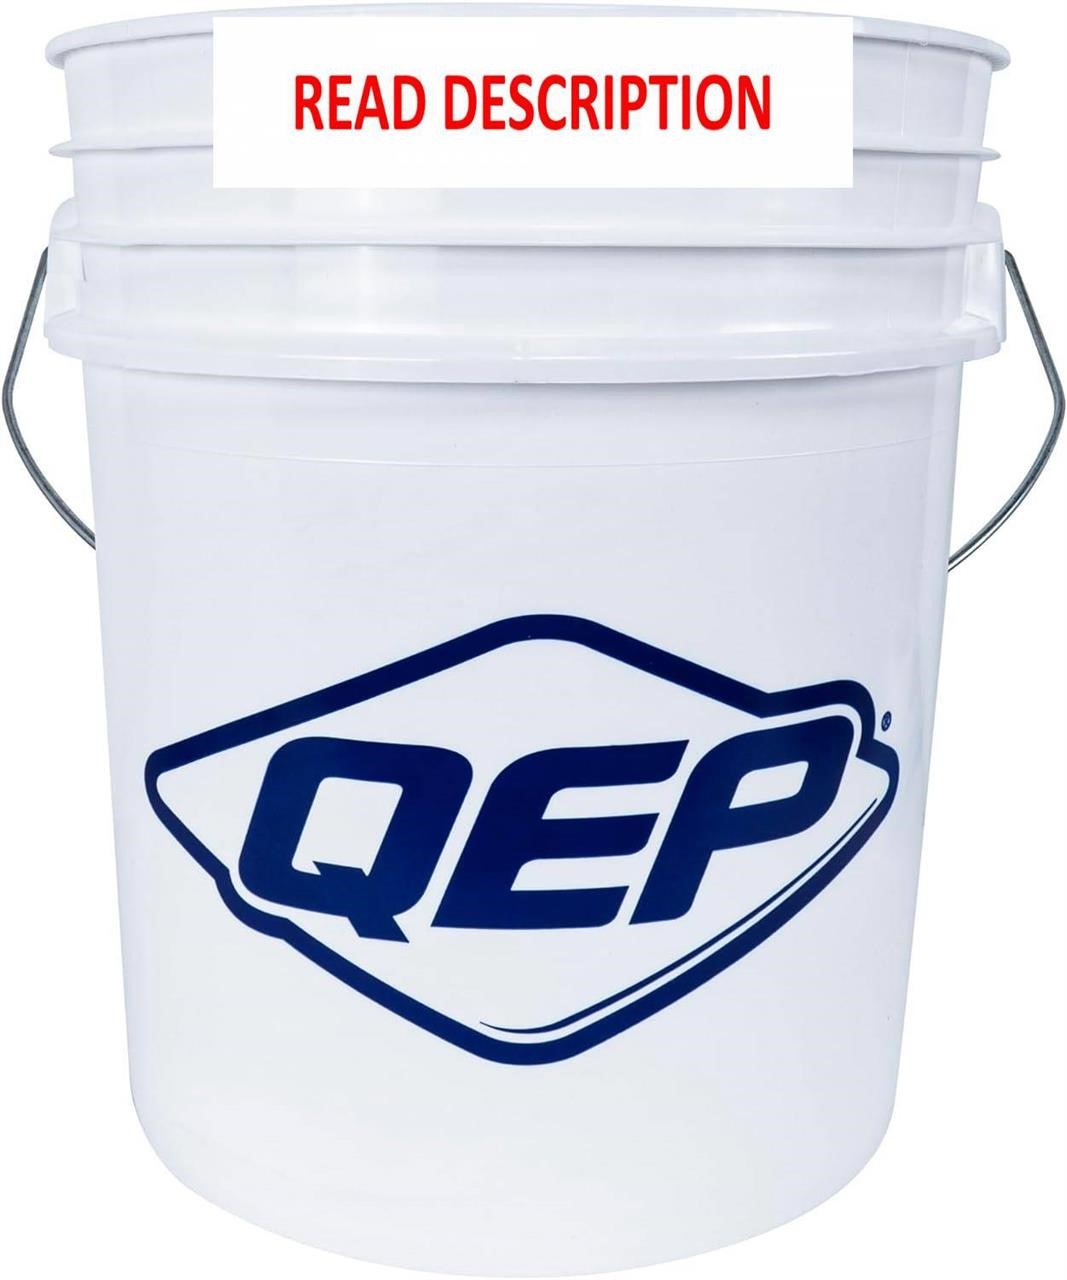 QEP 5 Gallon Mixing Bucket - 90 mil HDPE  4 Pack